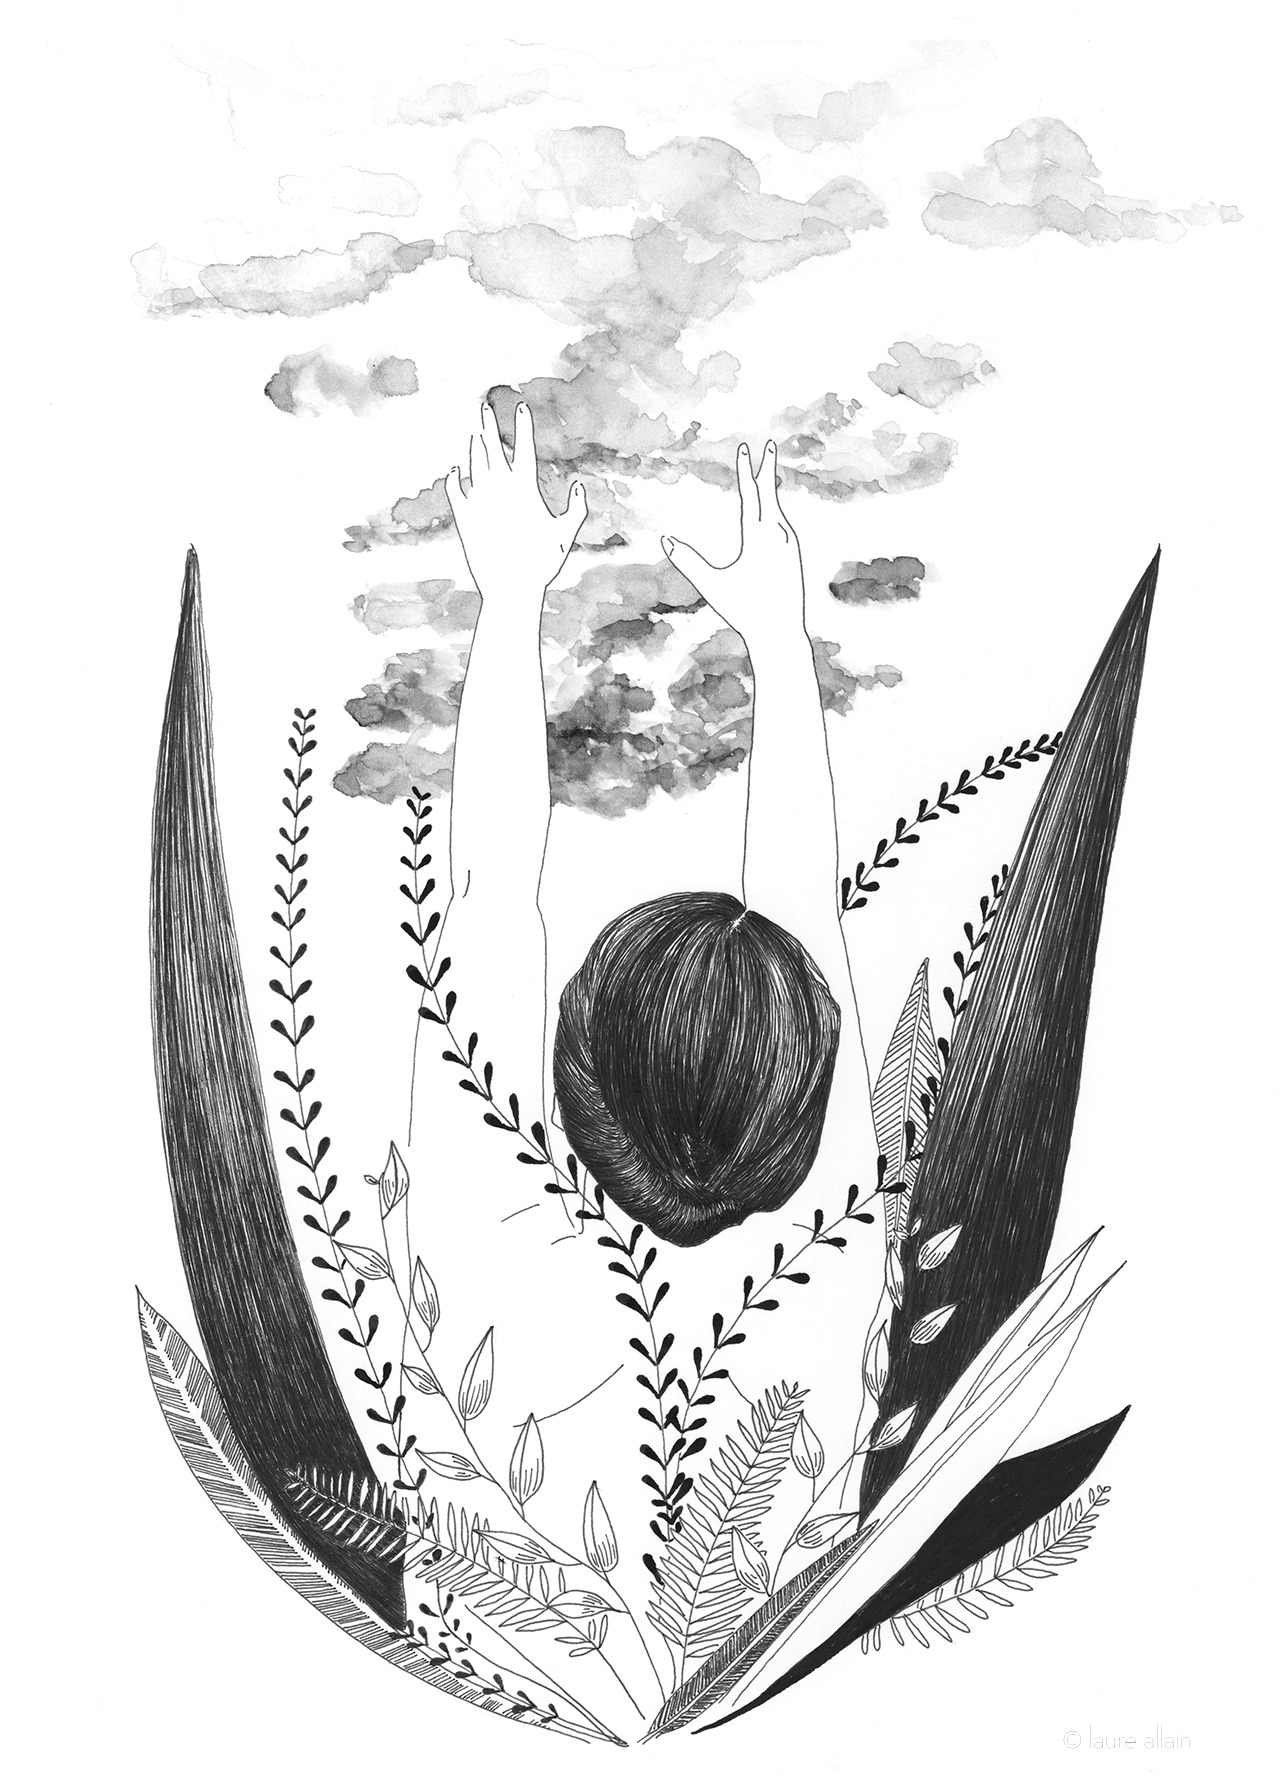 Illustration for a poem called ‘growth’ laureallain.tumblr.com